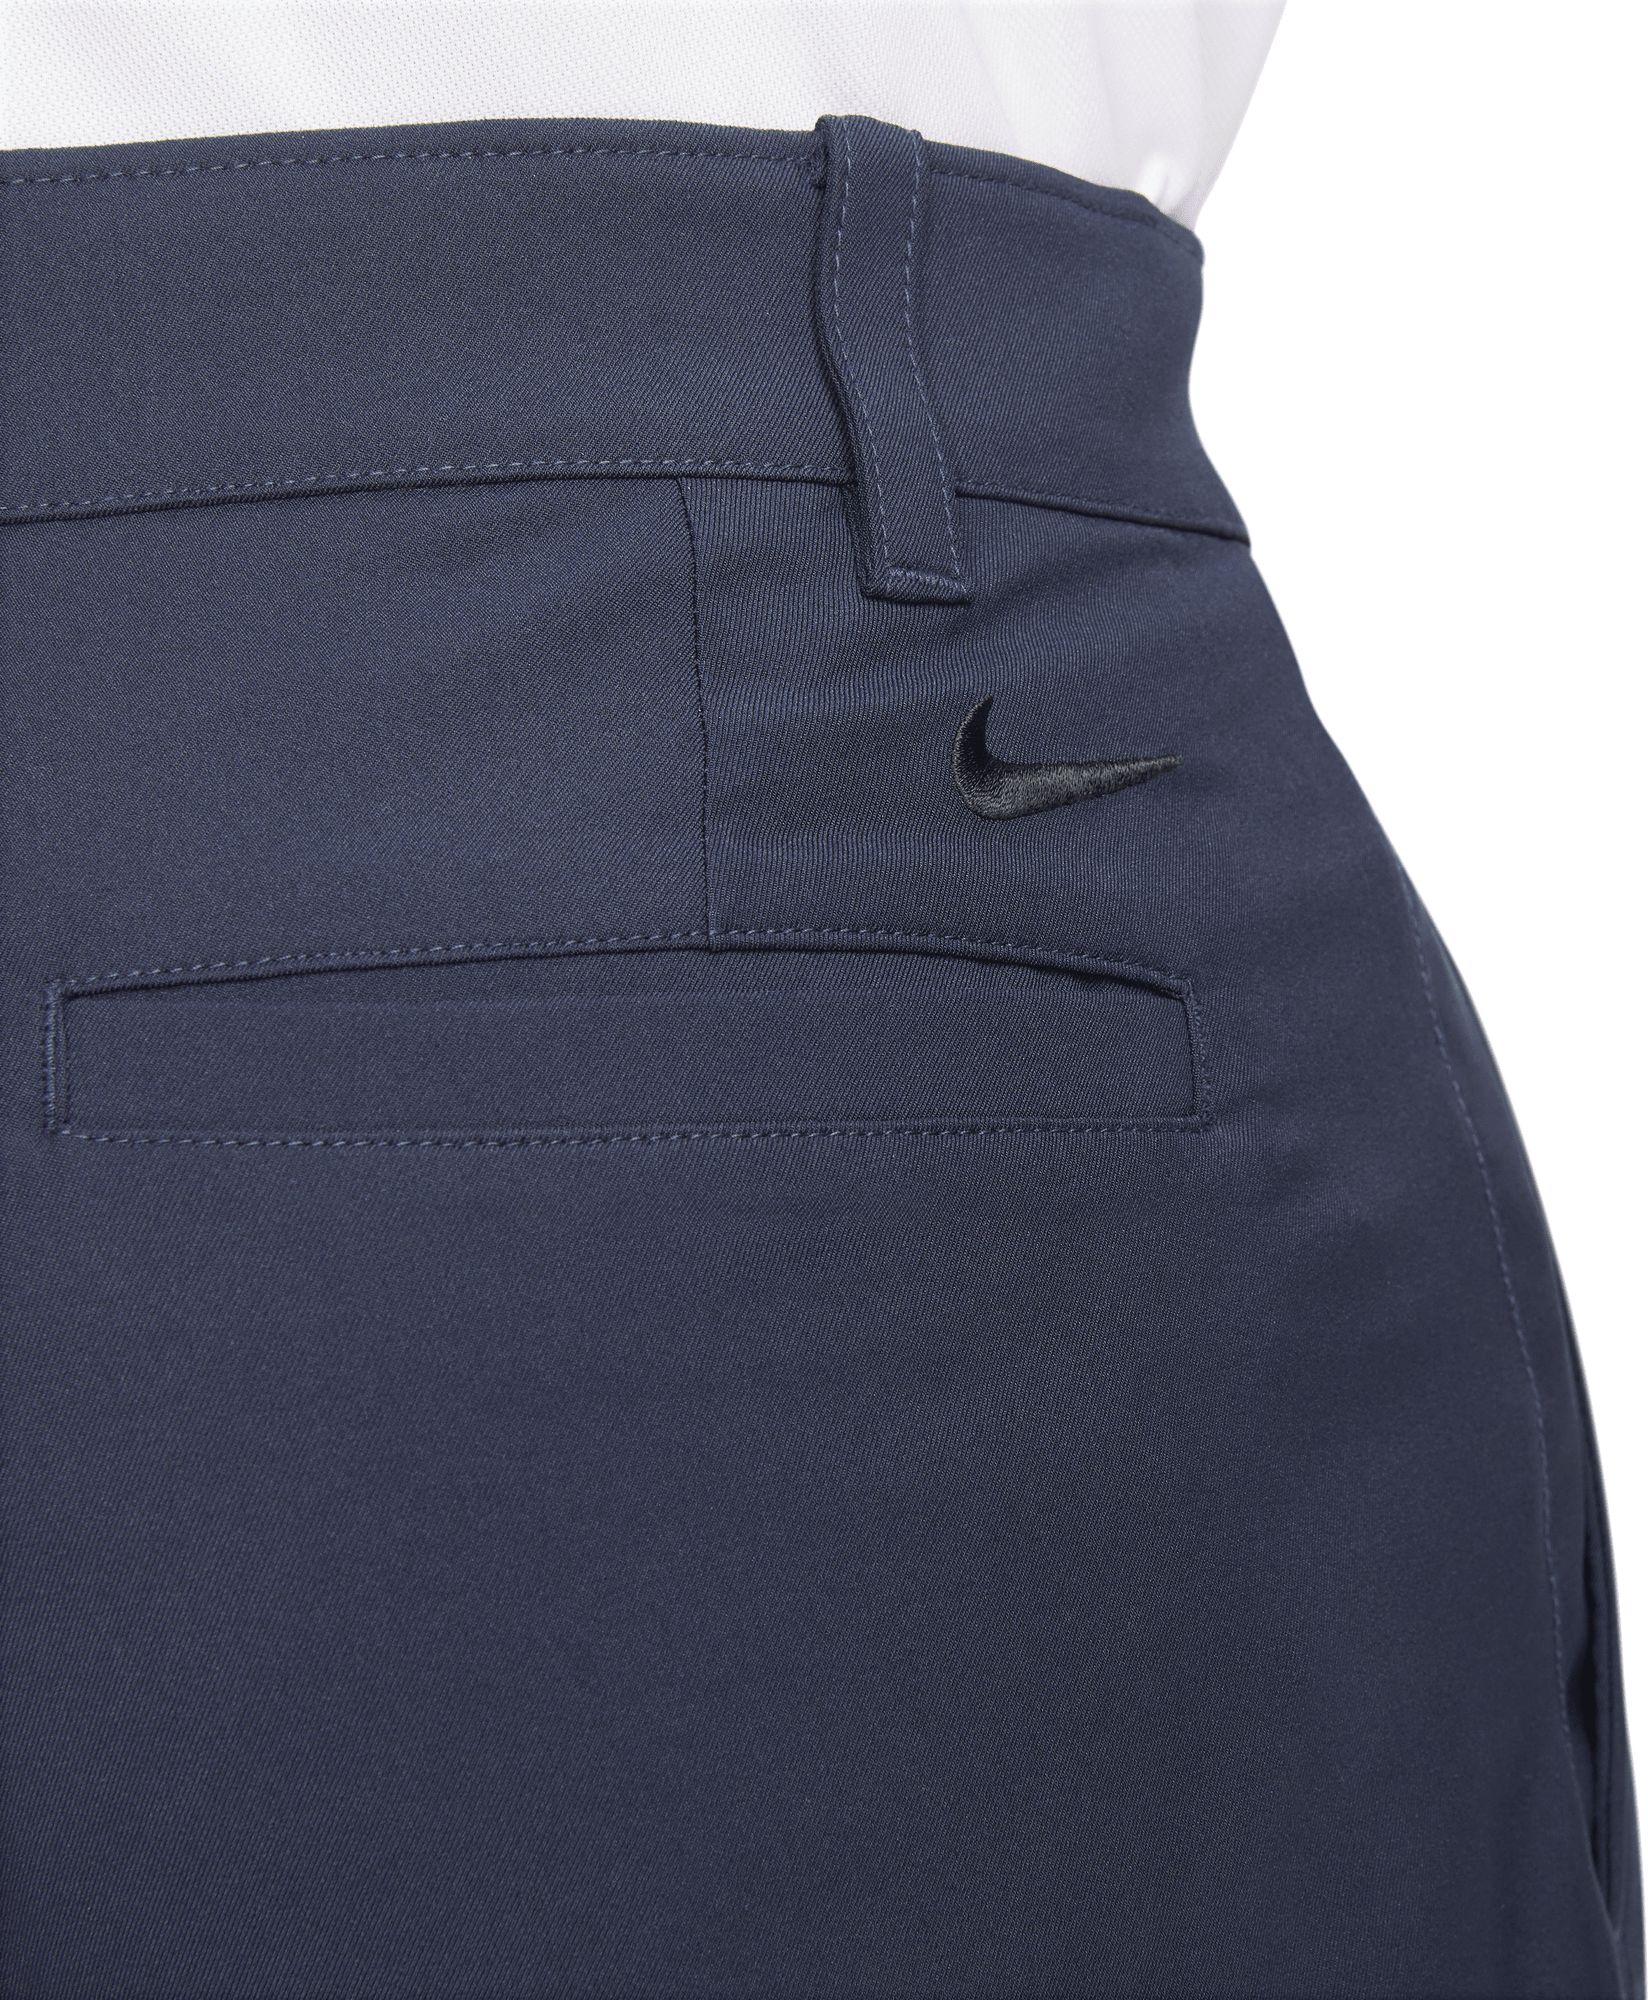 NIKE, Nike Dri-FIT Victory Men's Golf Pant